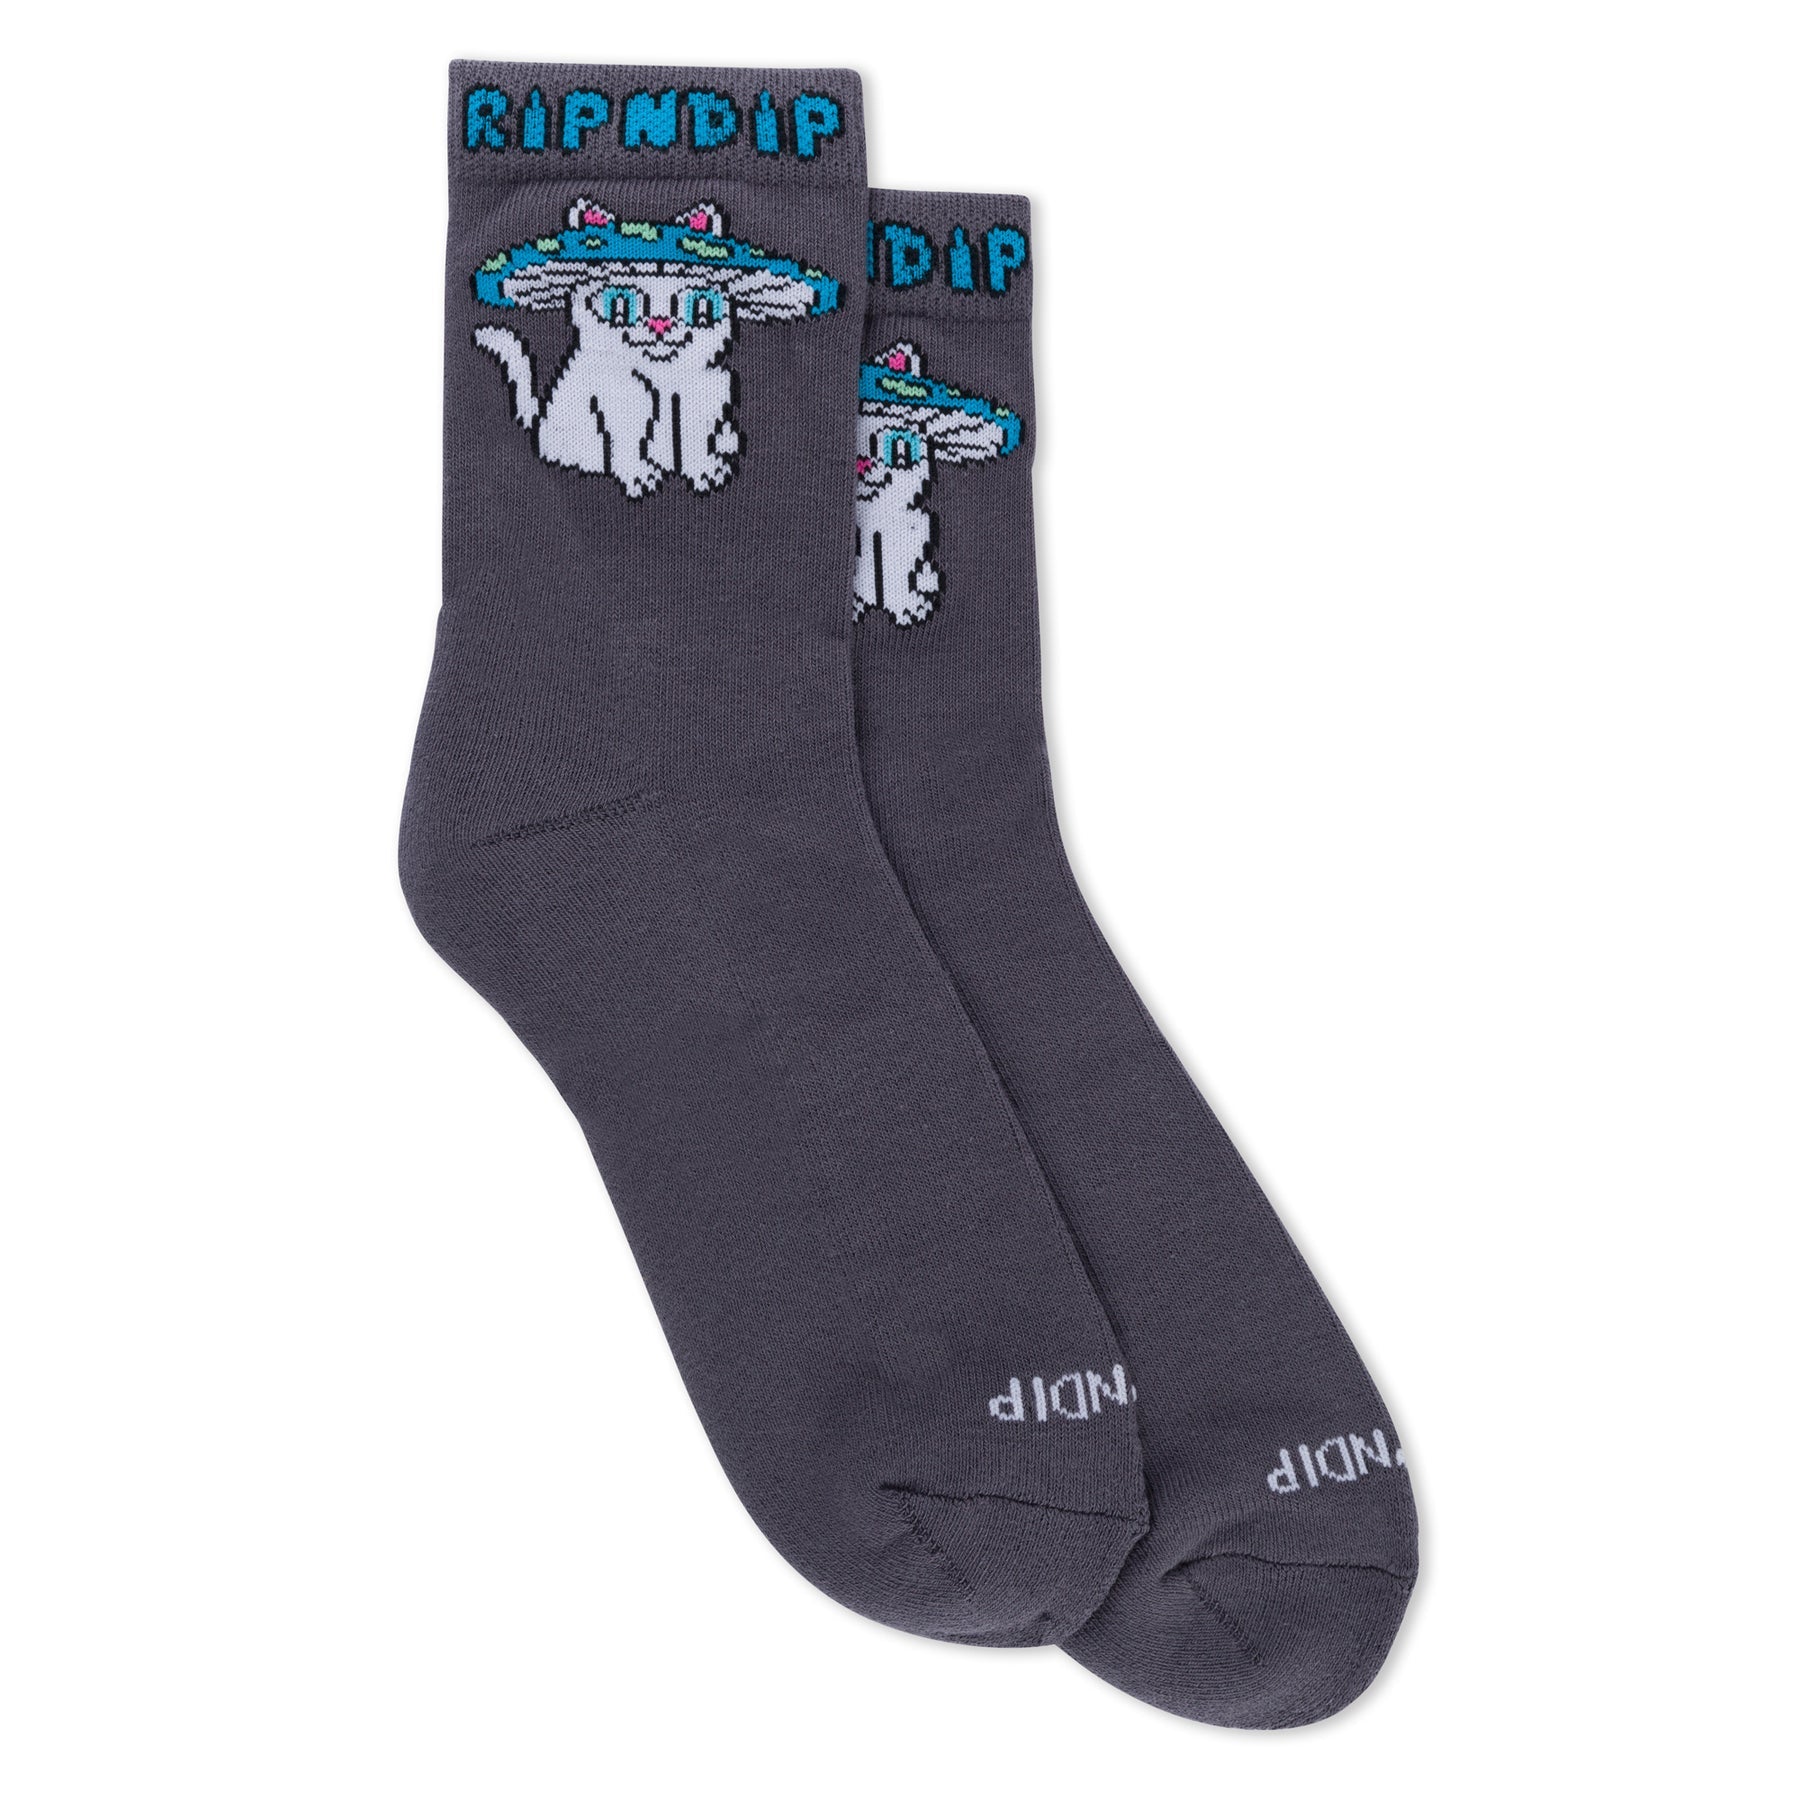 Shroom Cat Socks